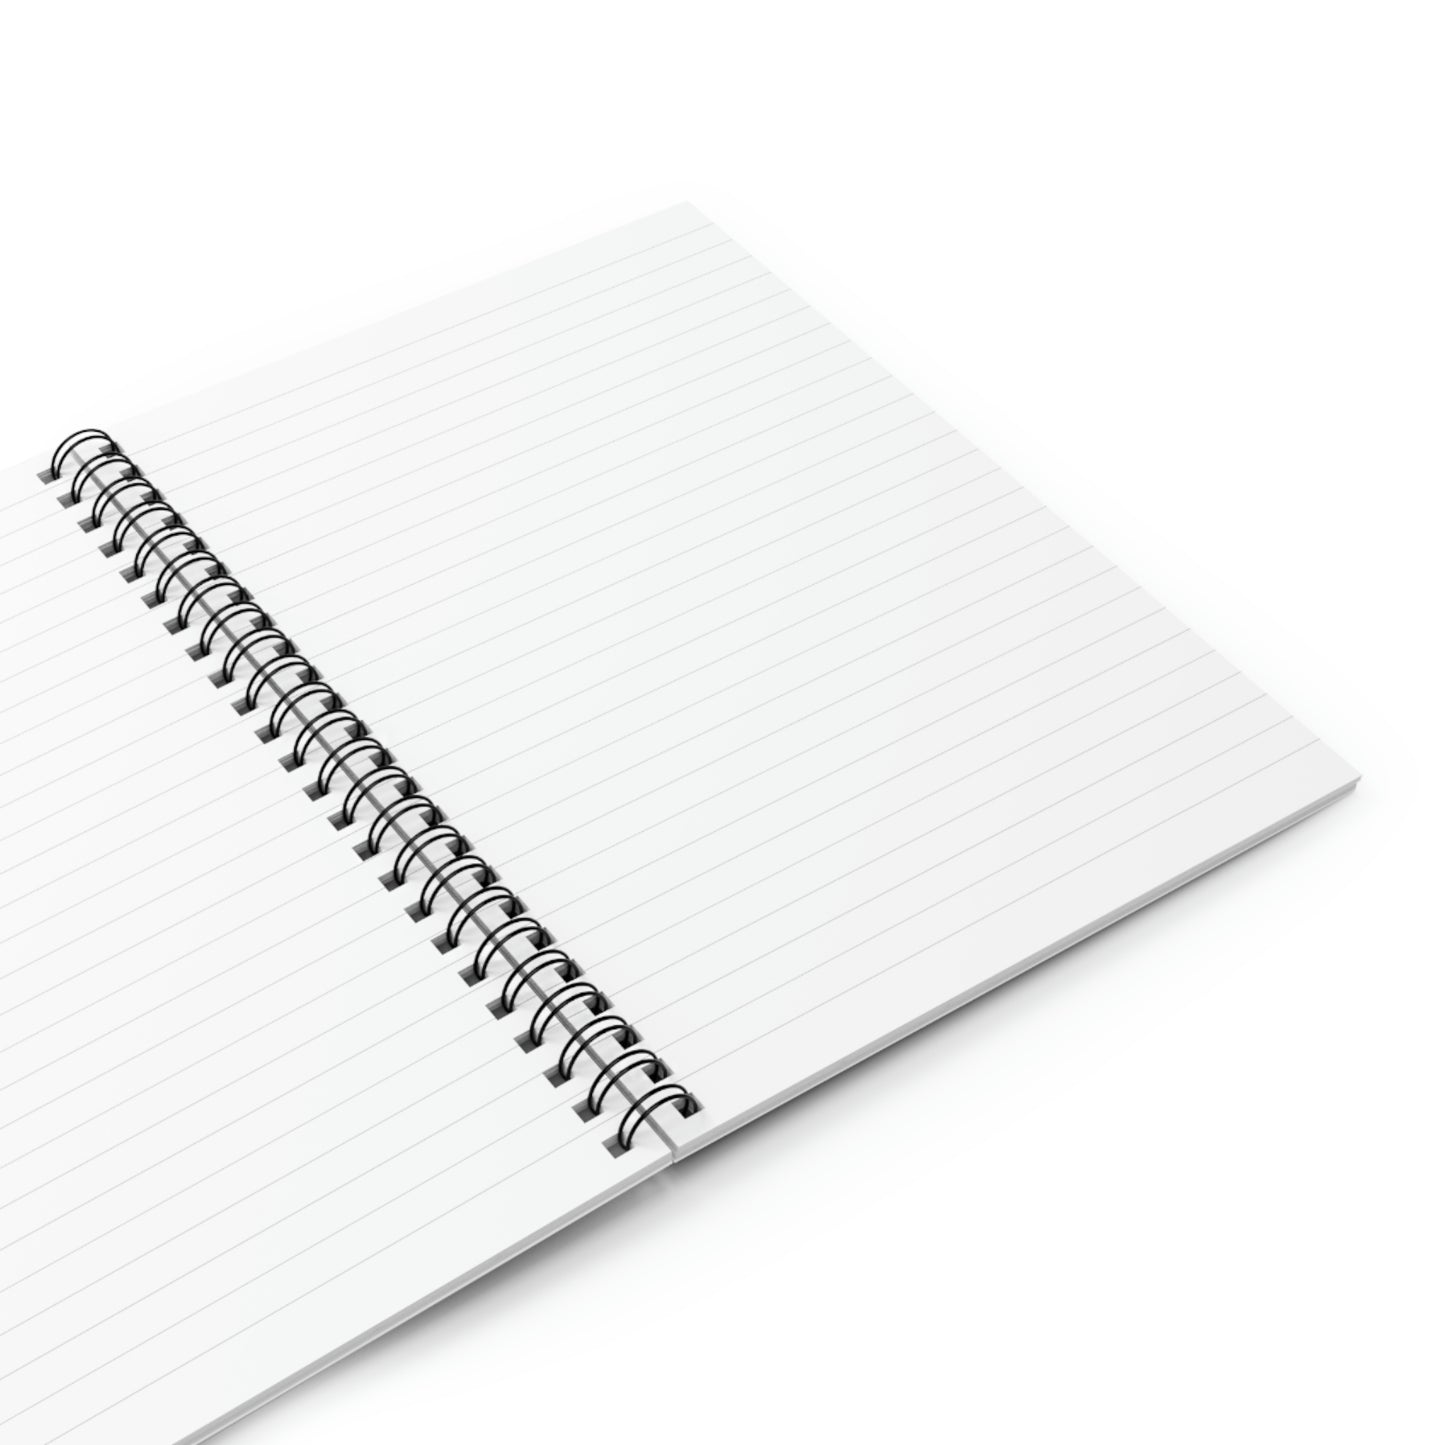 ABUNDANCE - Spiral Notebook - Ruled Line - Yellow Cover